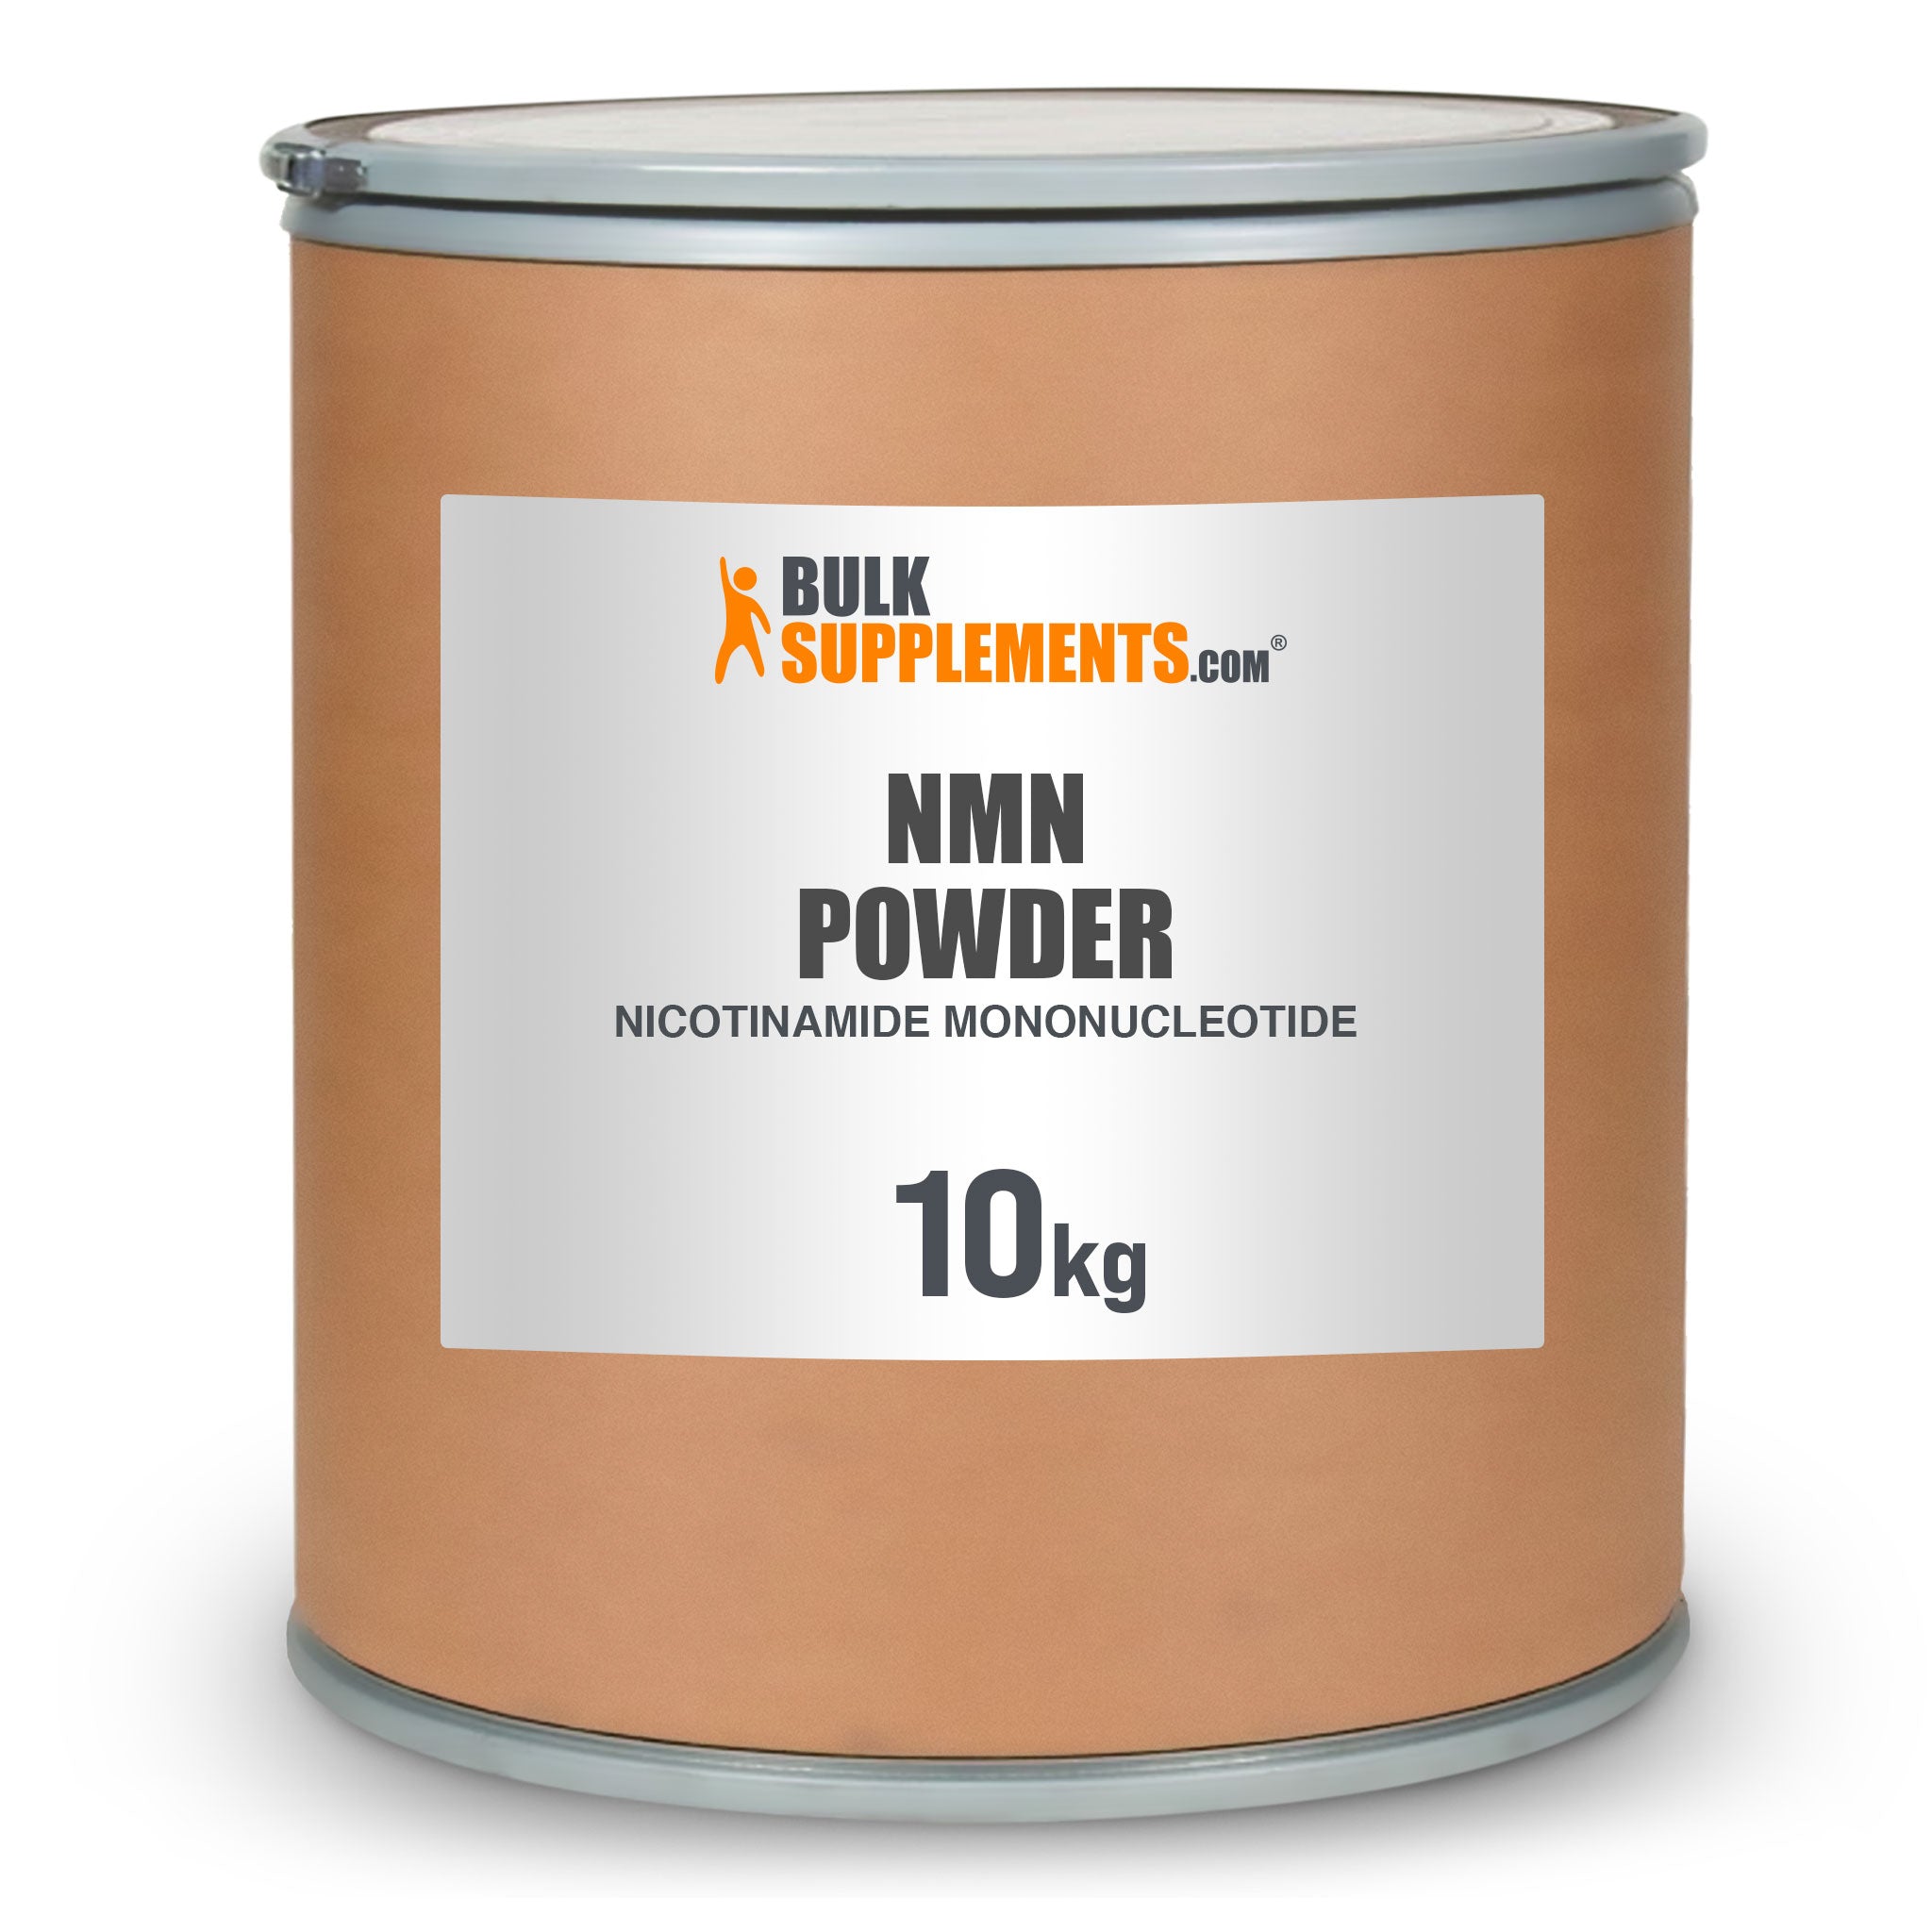 BulkSupplements NMN Powder Nicotinamide Mononucleotide 10kg drum